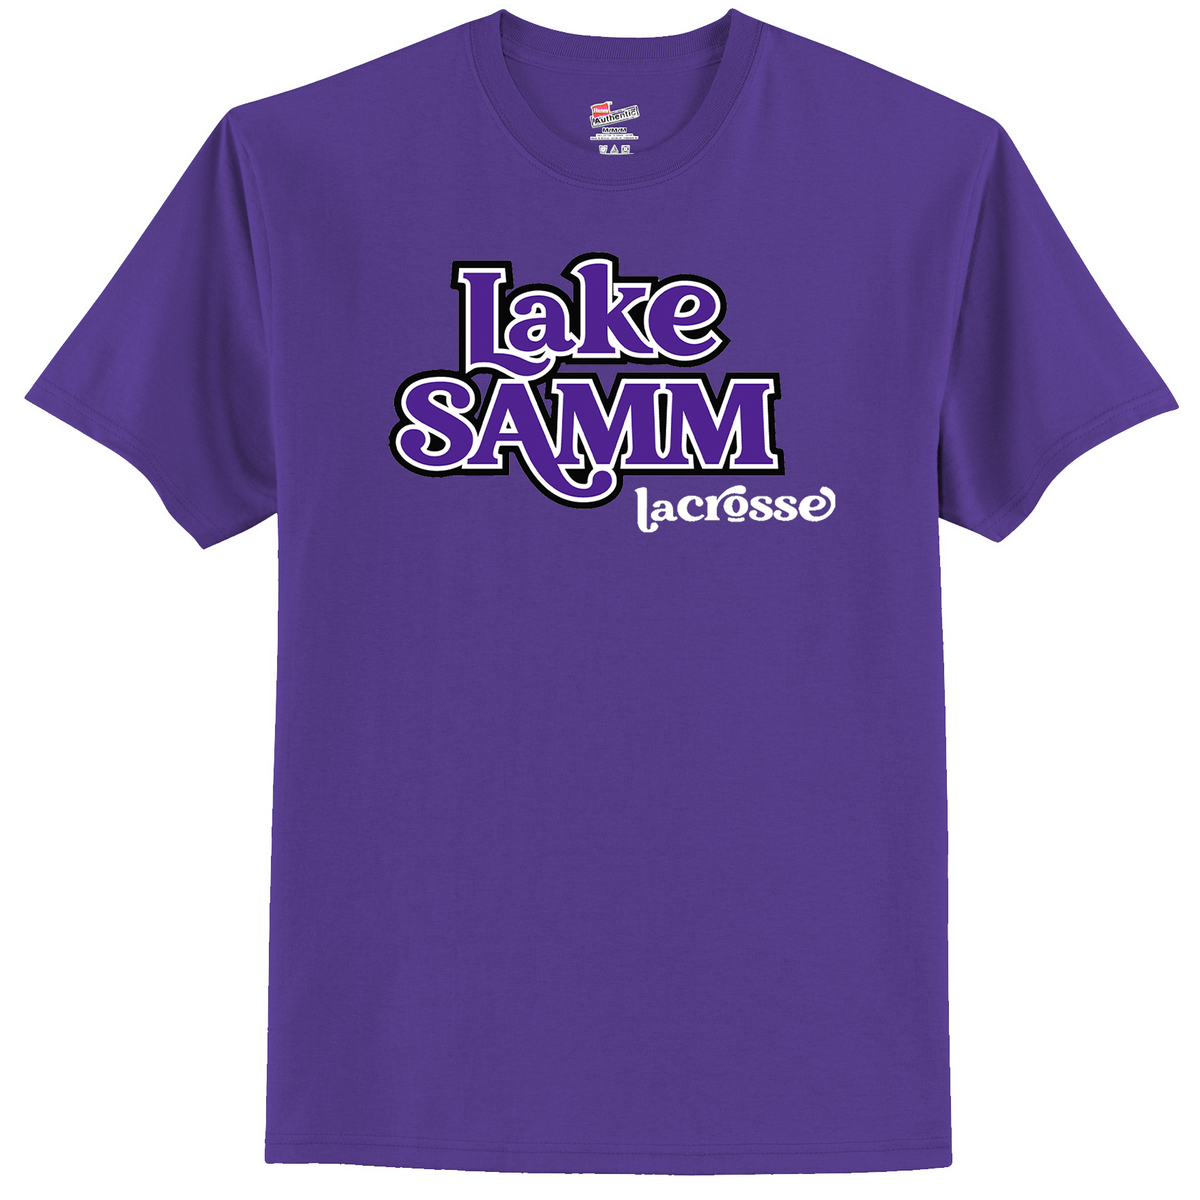 Lake Samm Lacrosse T-Shirt (Hanes)